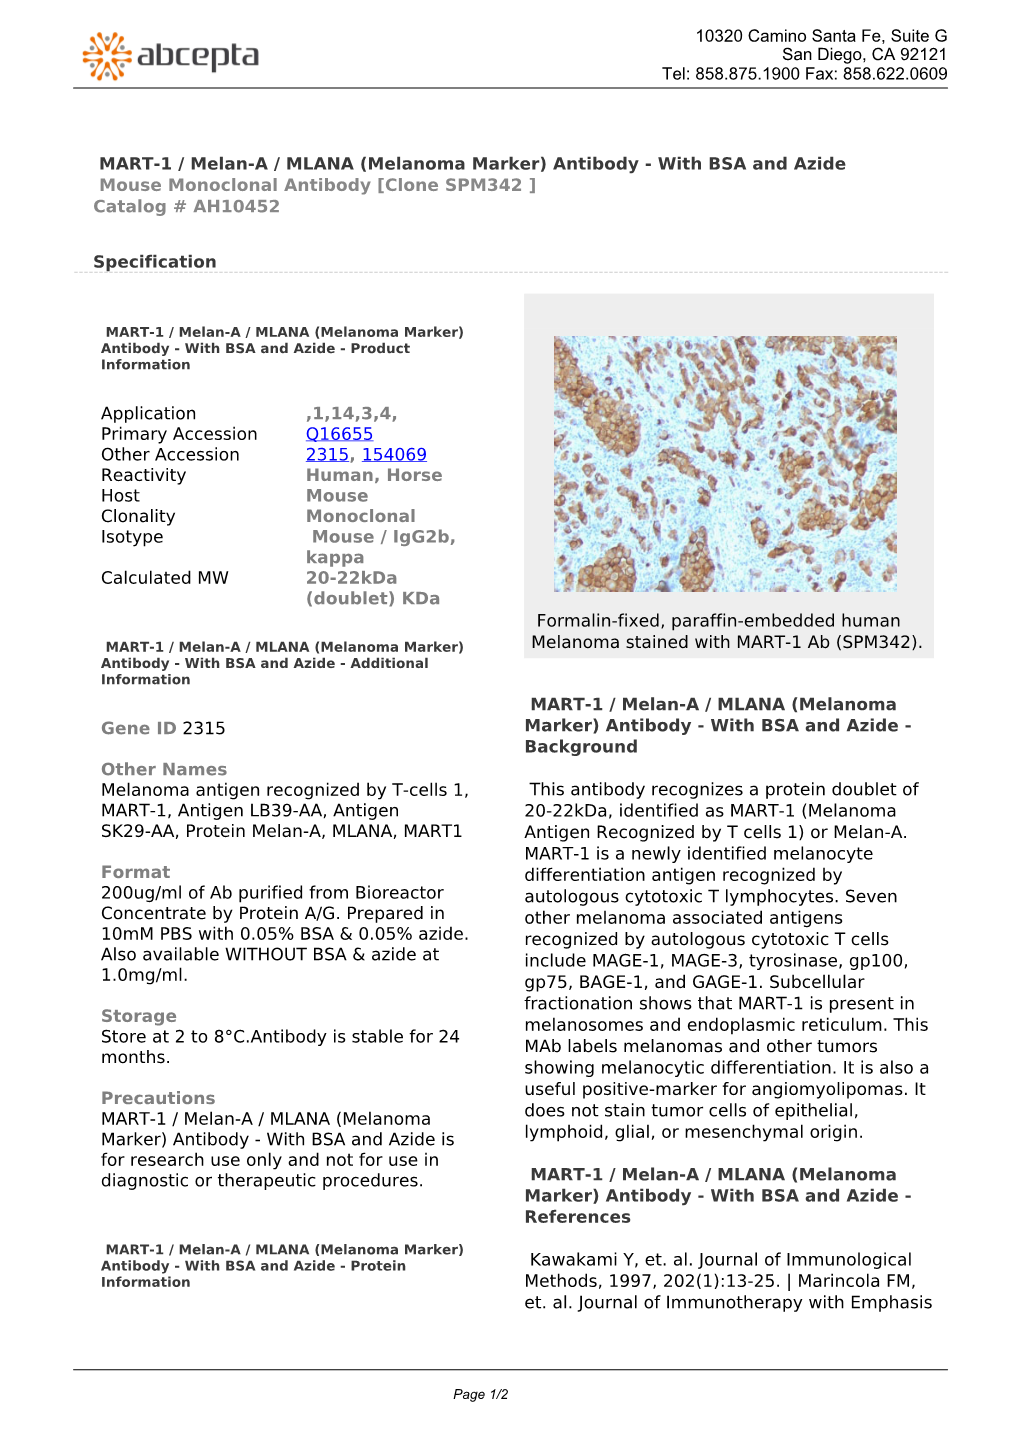 MART-1 / Melan-A / MLANA (Melanoma Marker) Antibody - with BSA and Azide Mouse Monoclonal Antibody [Clone SPM342 ] Catalog # AH10452